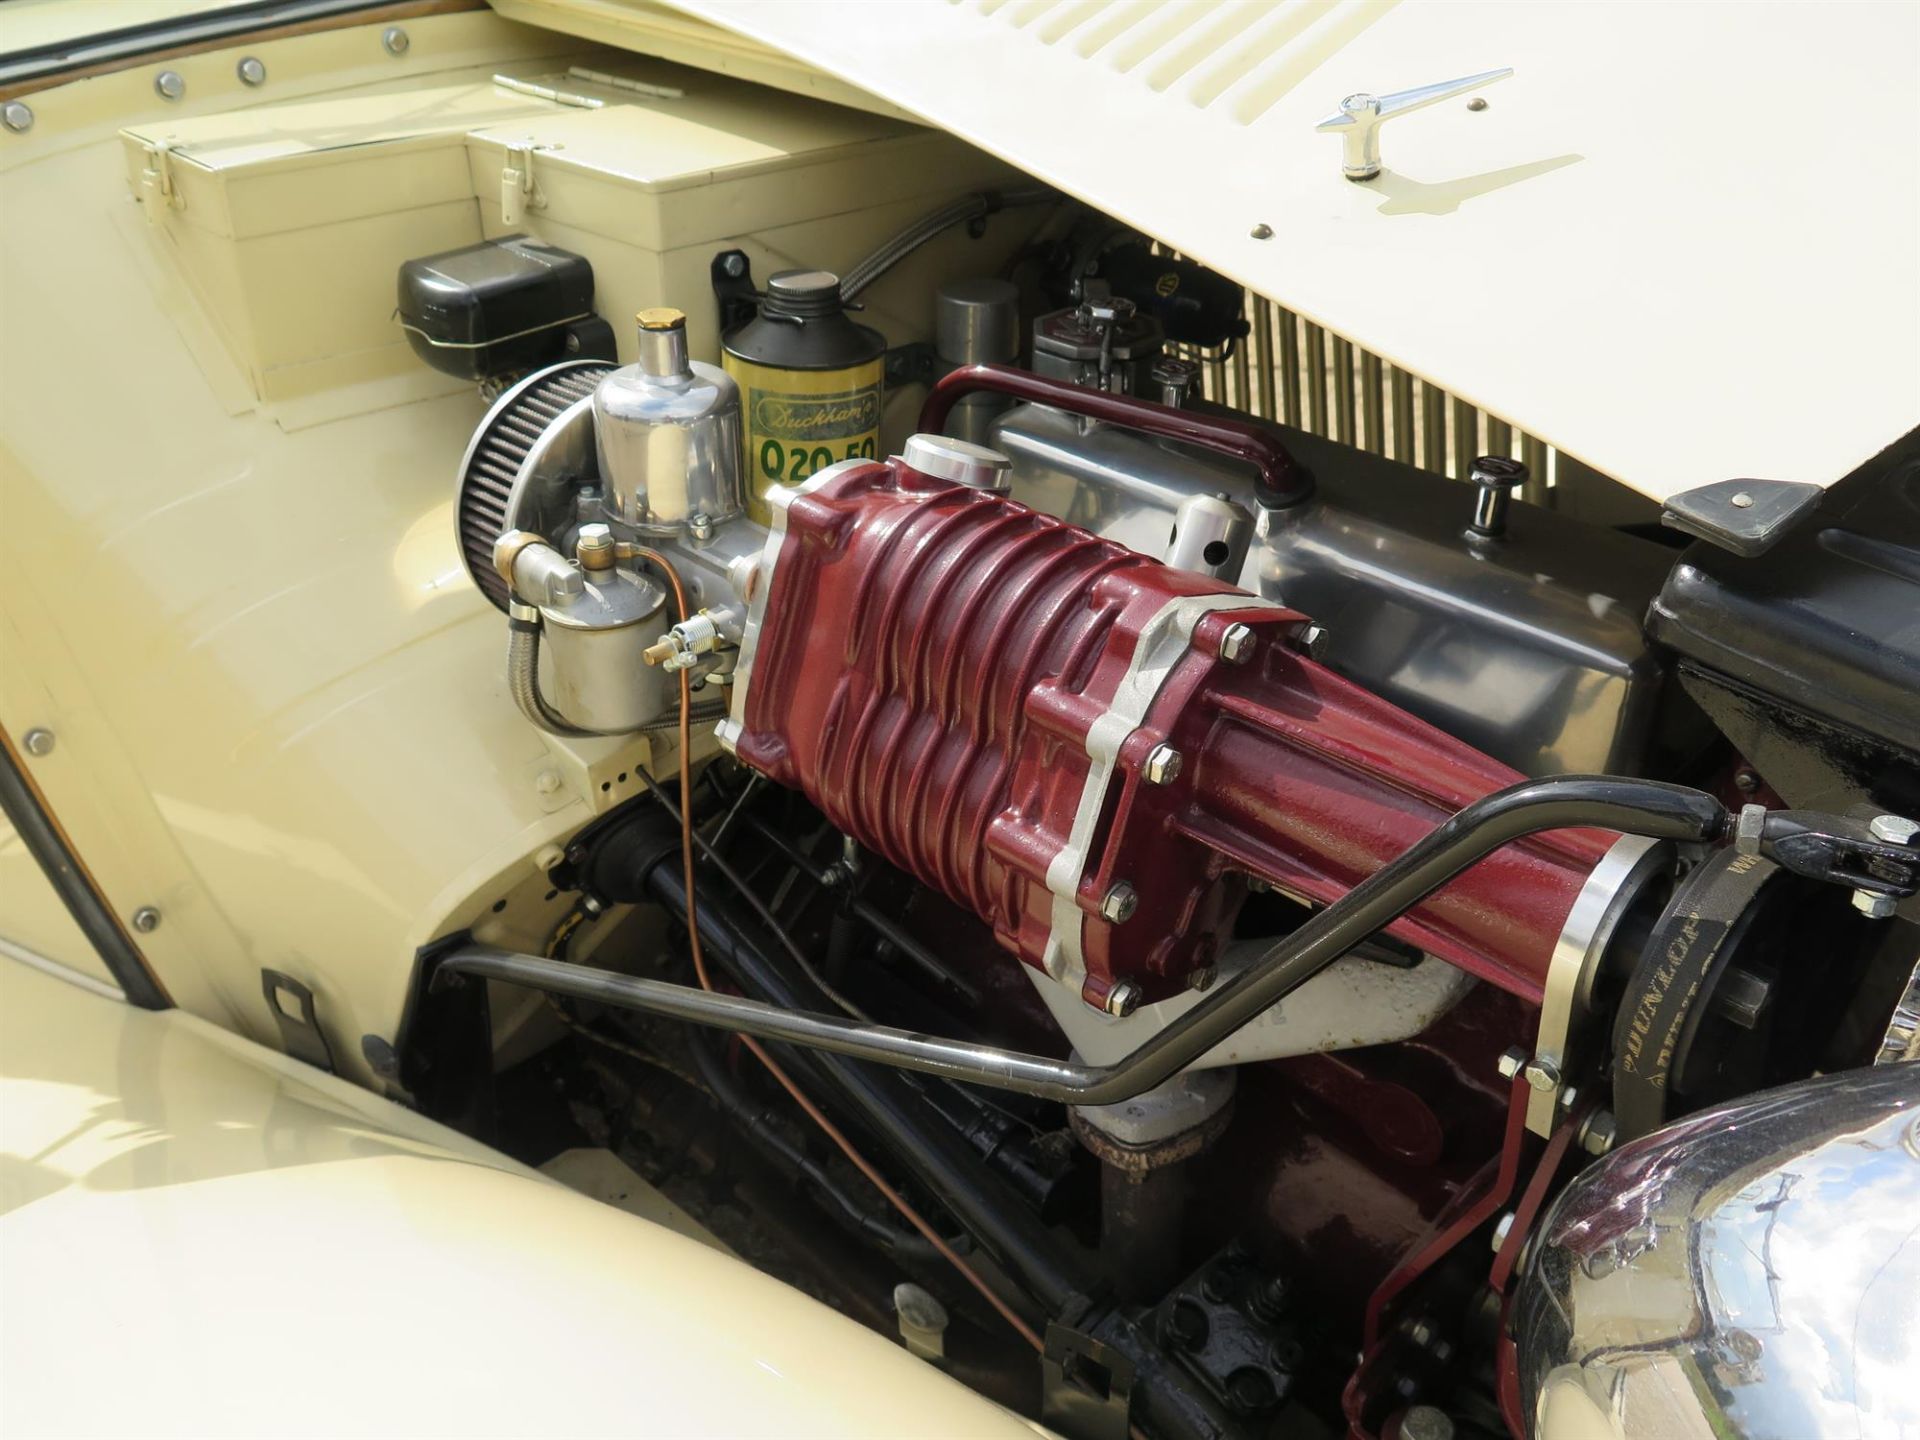 1949 MG TC Midget (Supercharged) - Image 3 of 10